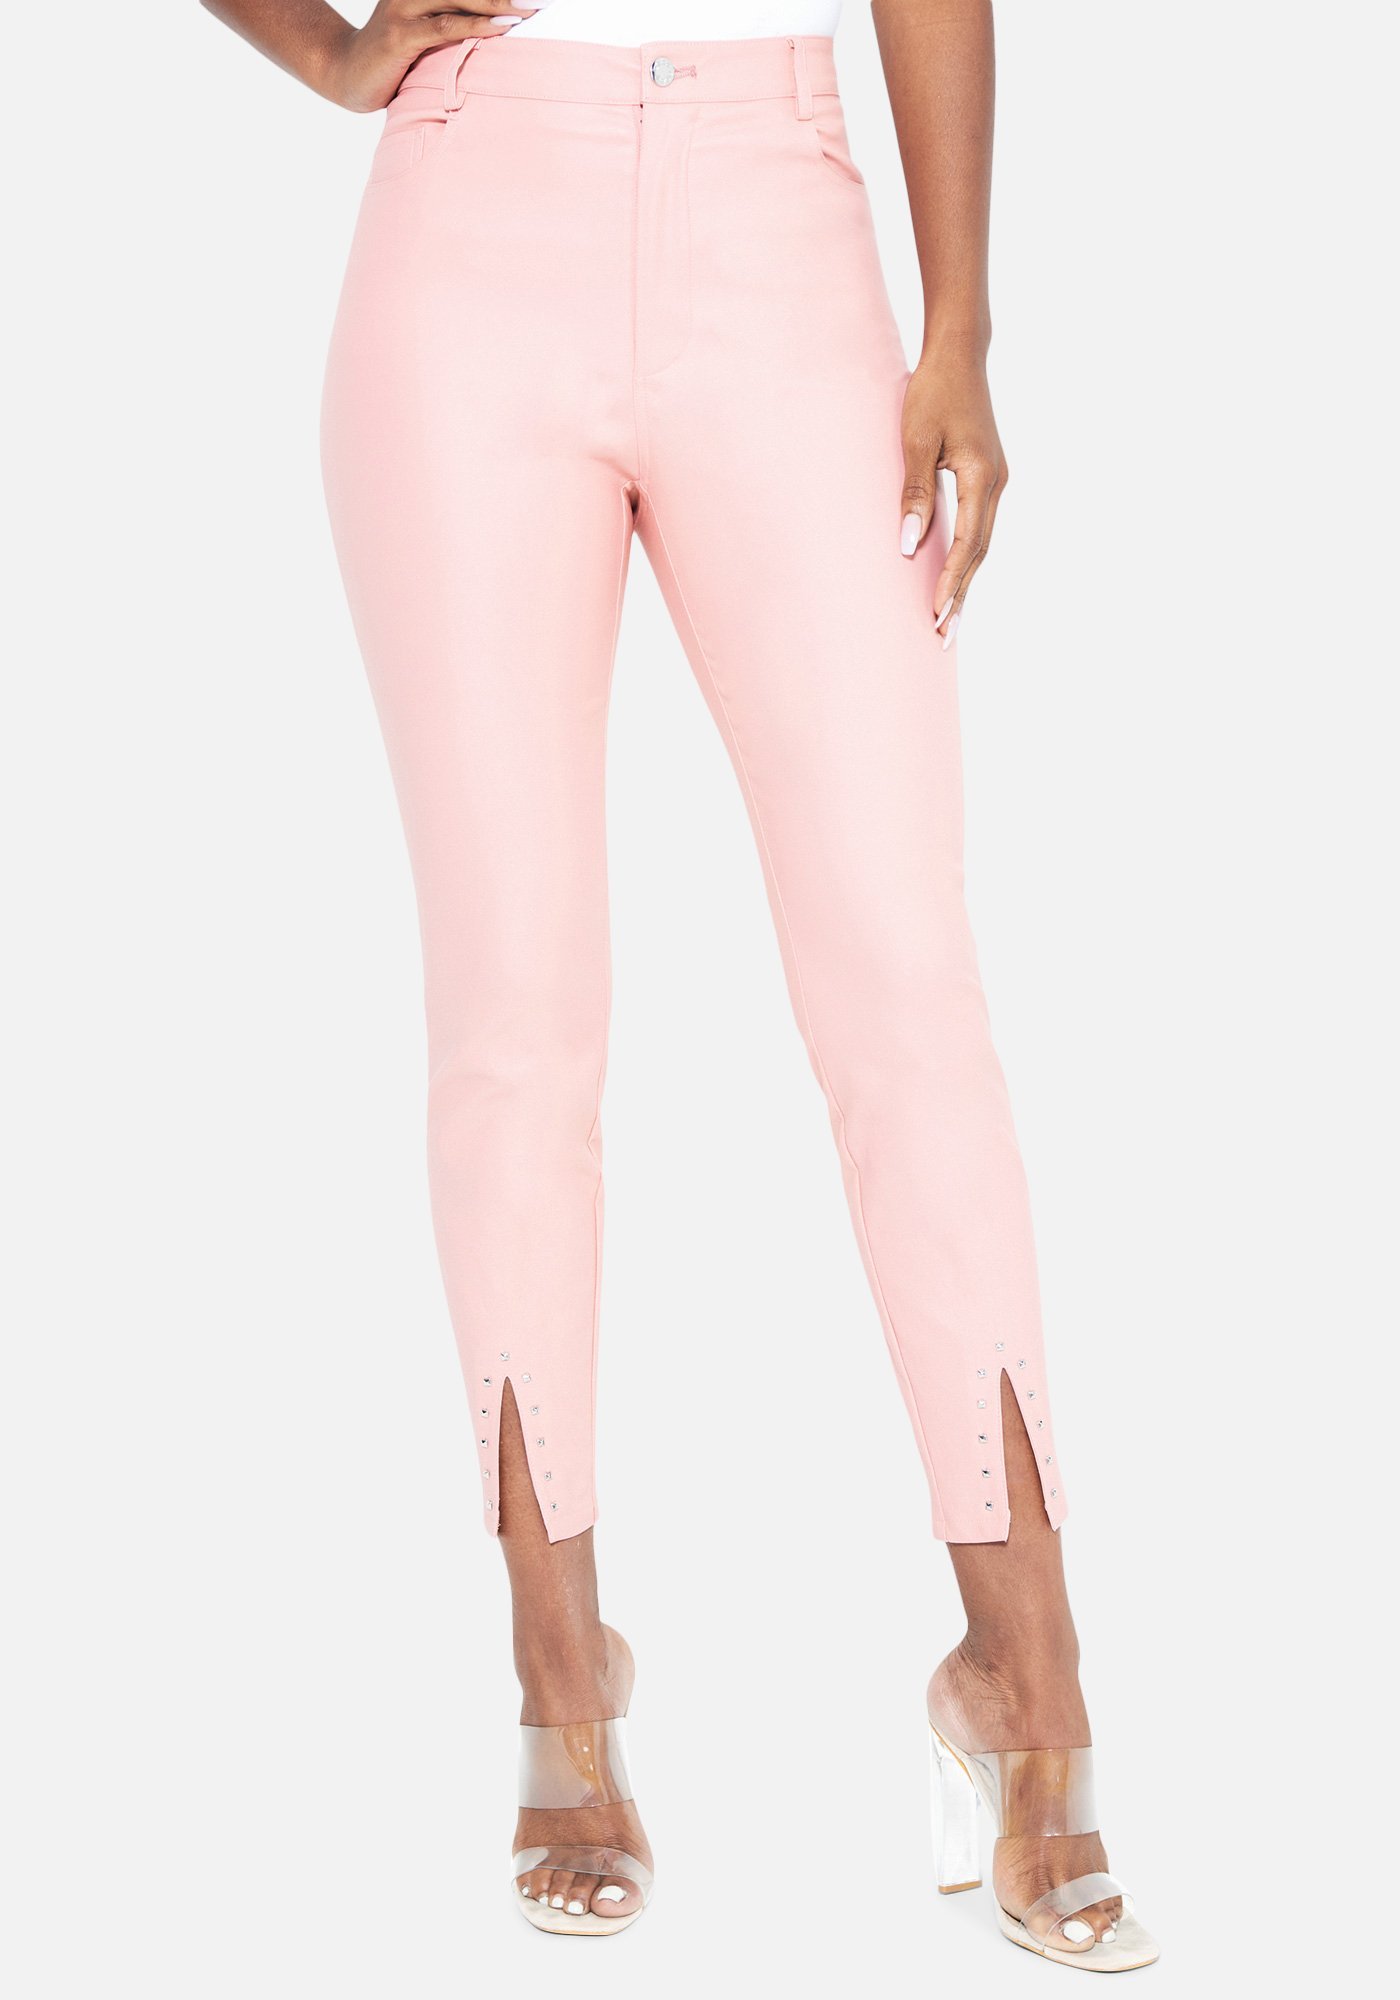 Bebe Women's Stud Detail Slit Front Coated Pant, Size 6 in BRIDAL ROSE Spandex/Nylon